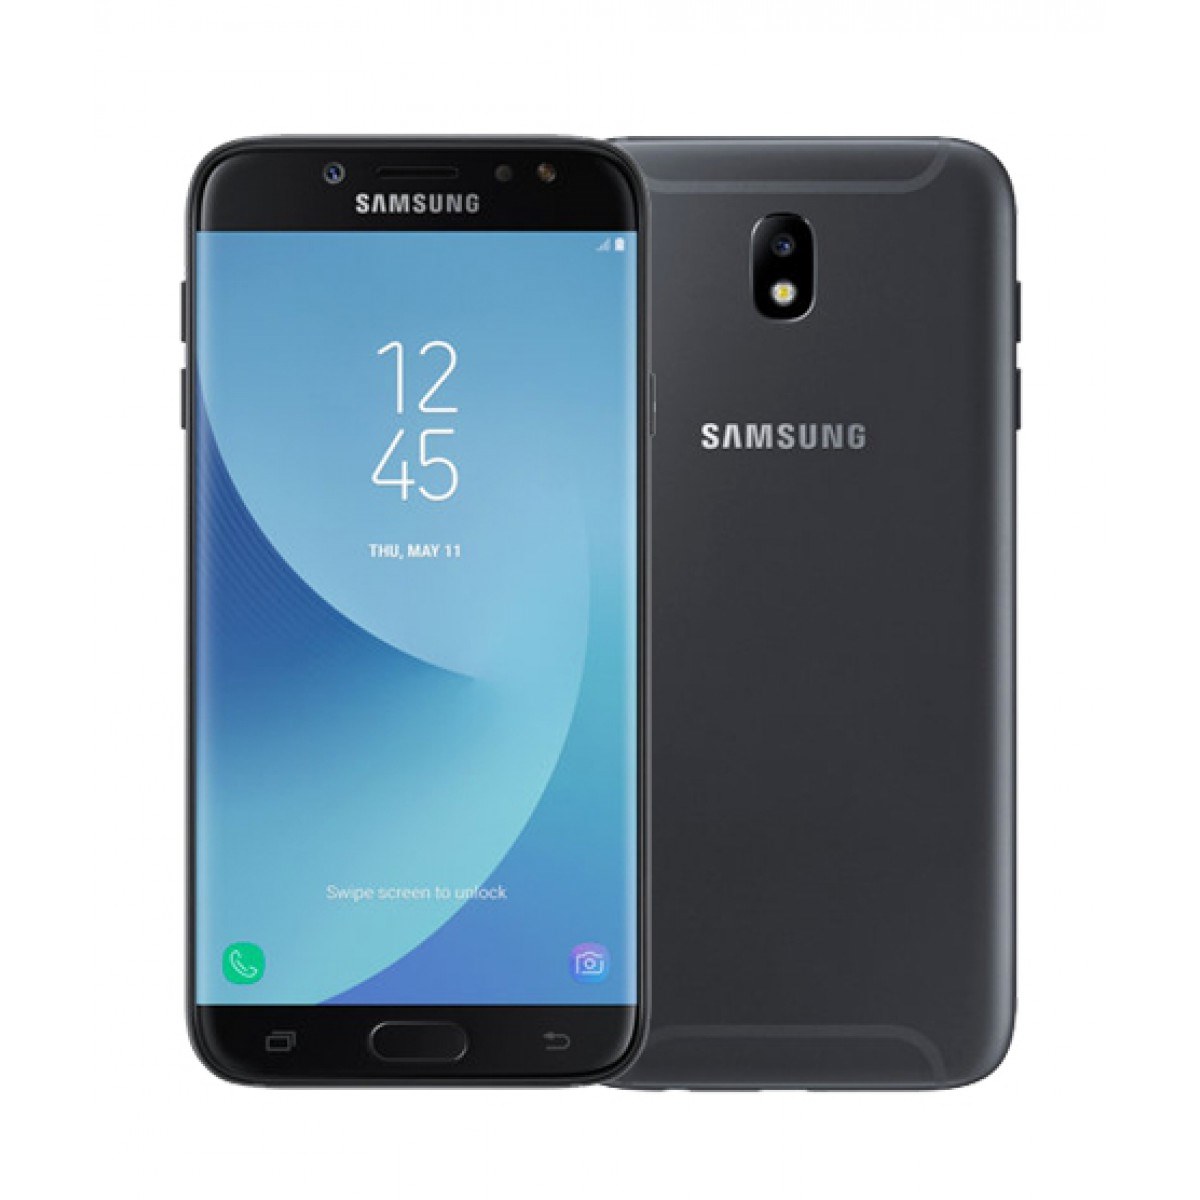 Samsung Galaxy J7 Pro (Unlocked All Carriers)